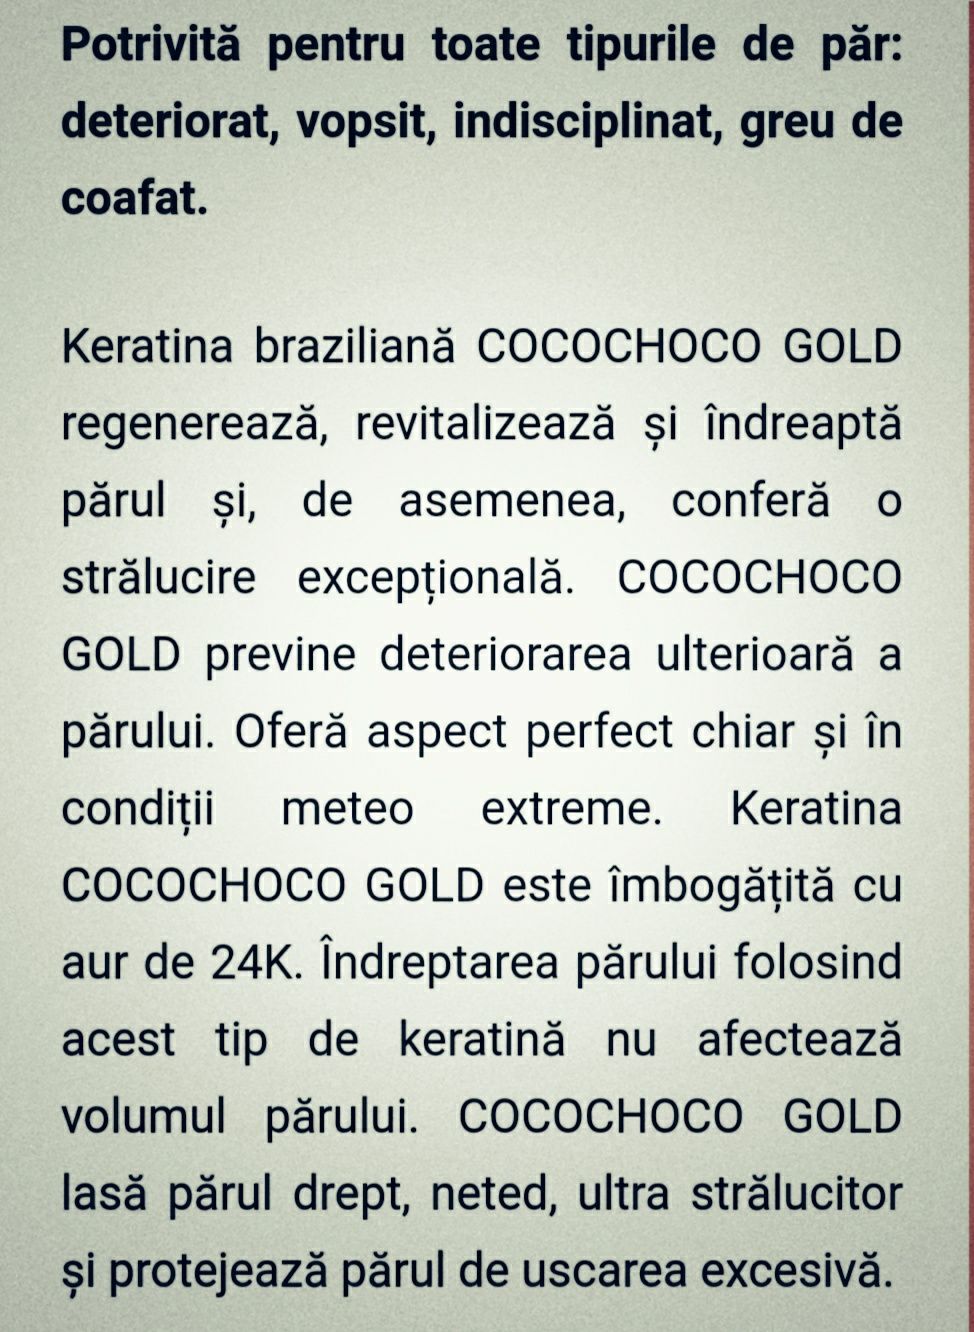 Tratament keratina braziliana cocochoco gold